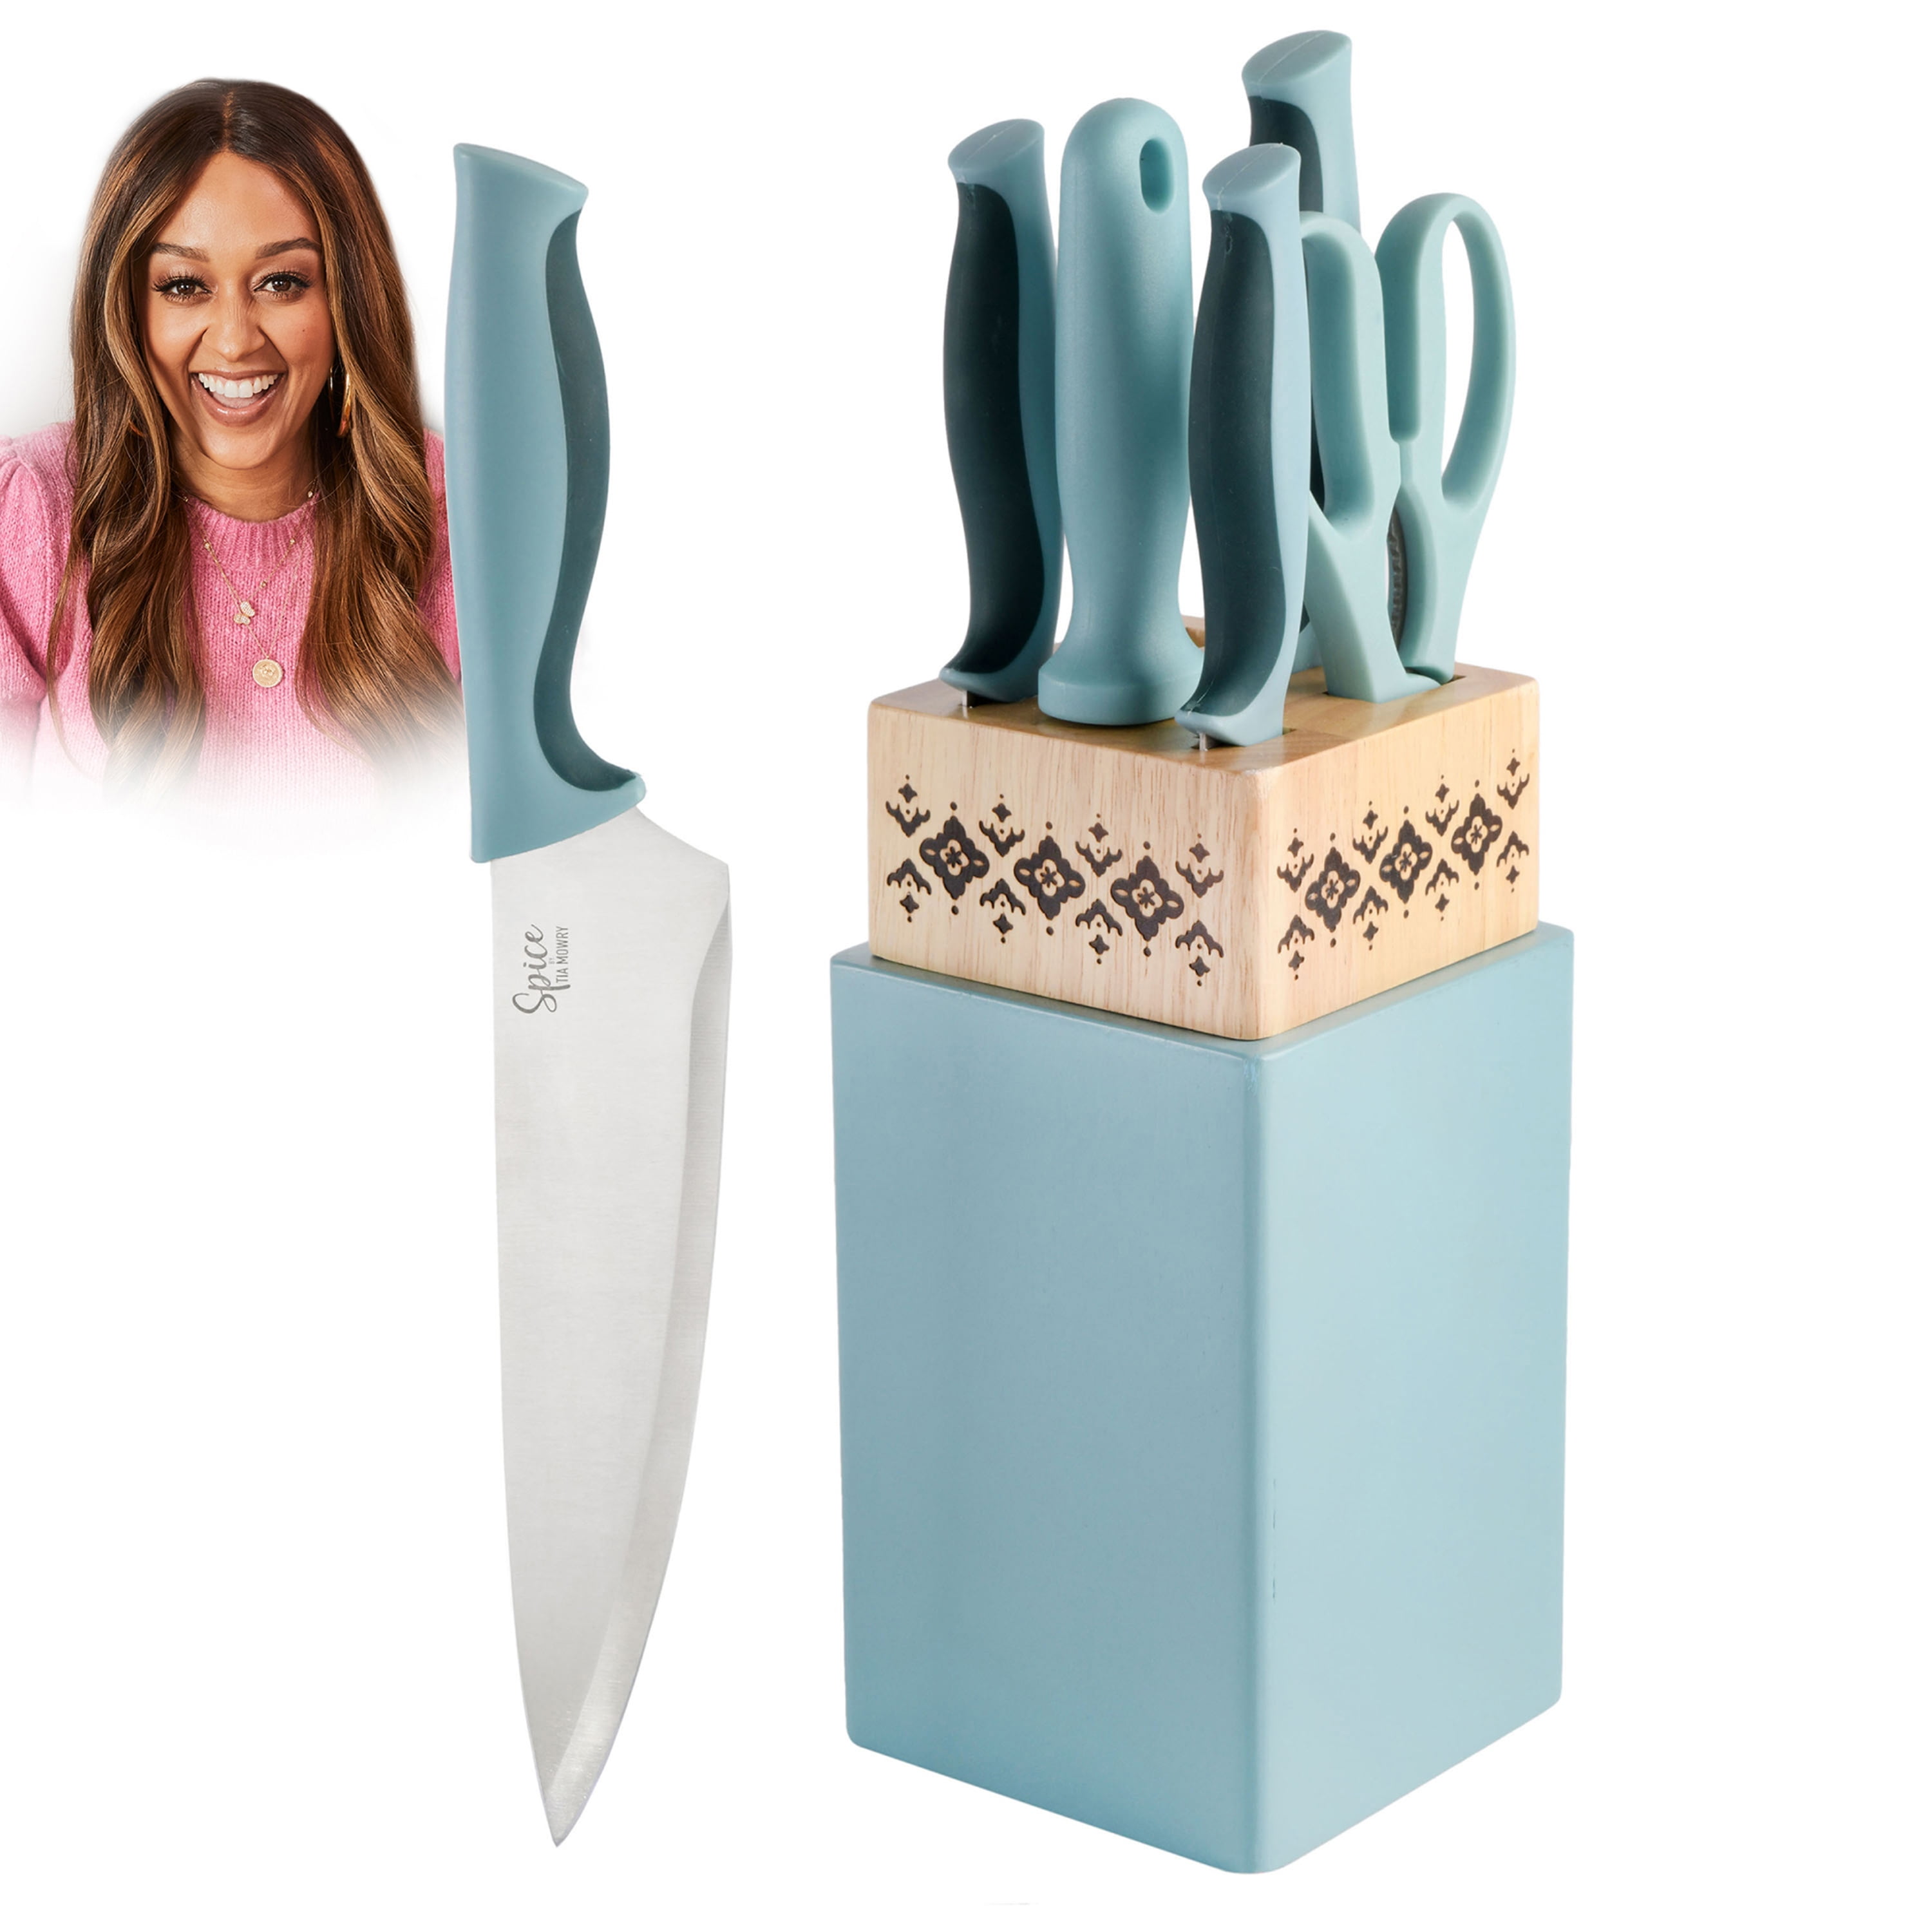 Dishwasher Safe Kya25 Rainbow Titanium Knife Block Set, Kitchen Knives Set with Block, Kitchen Scissor, Cutlery Block Knife Sets